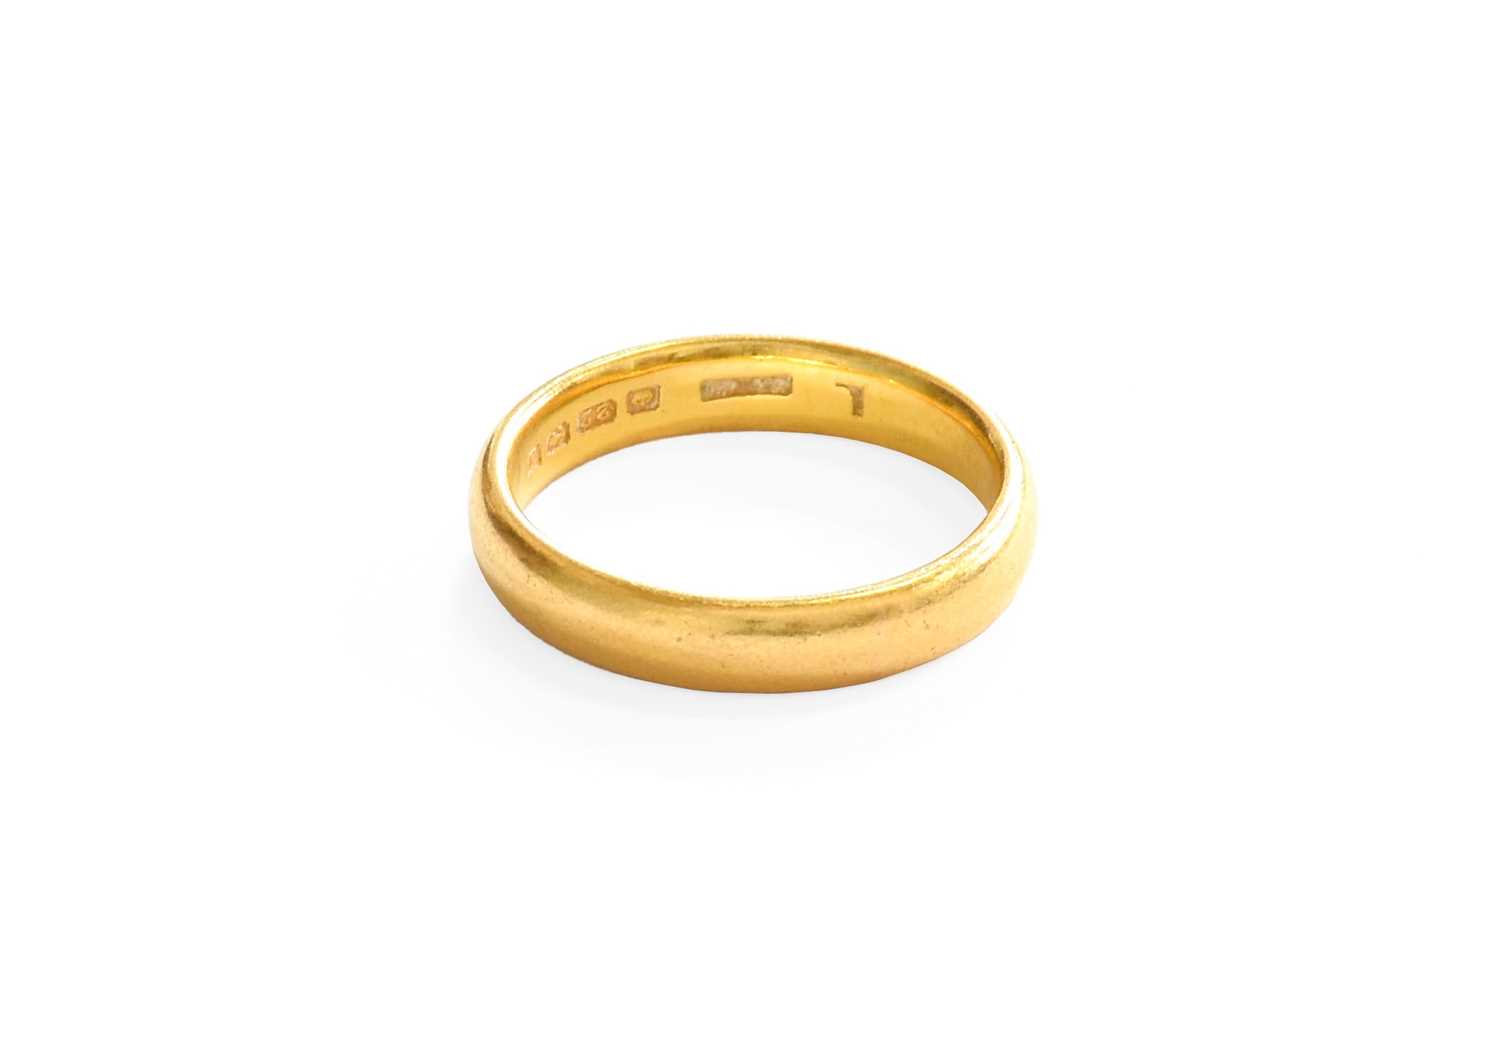 A 22 Carat Gold Band Ring, finger size Q Gross weight 6.8 grams.